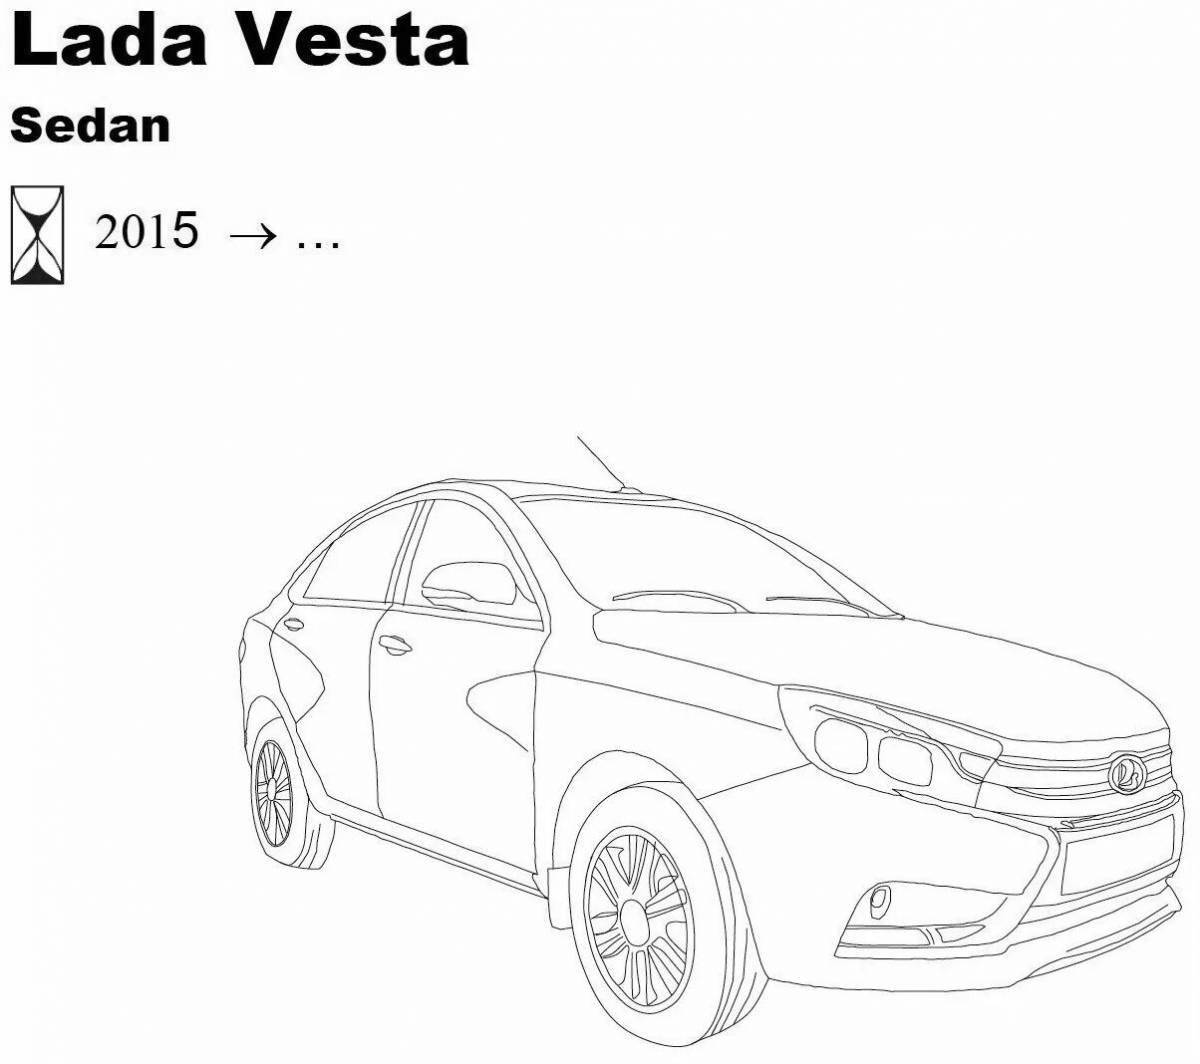 Fun coloring book Lada Vesta for kids